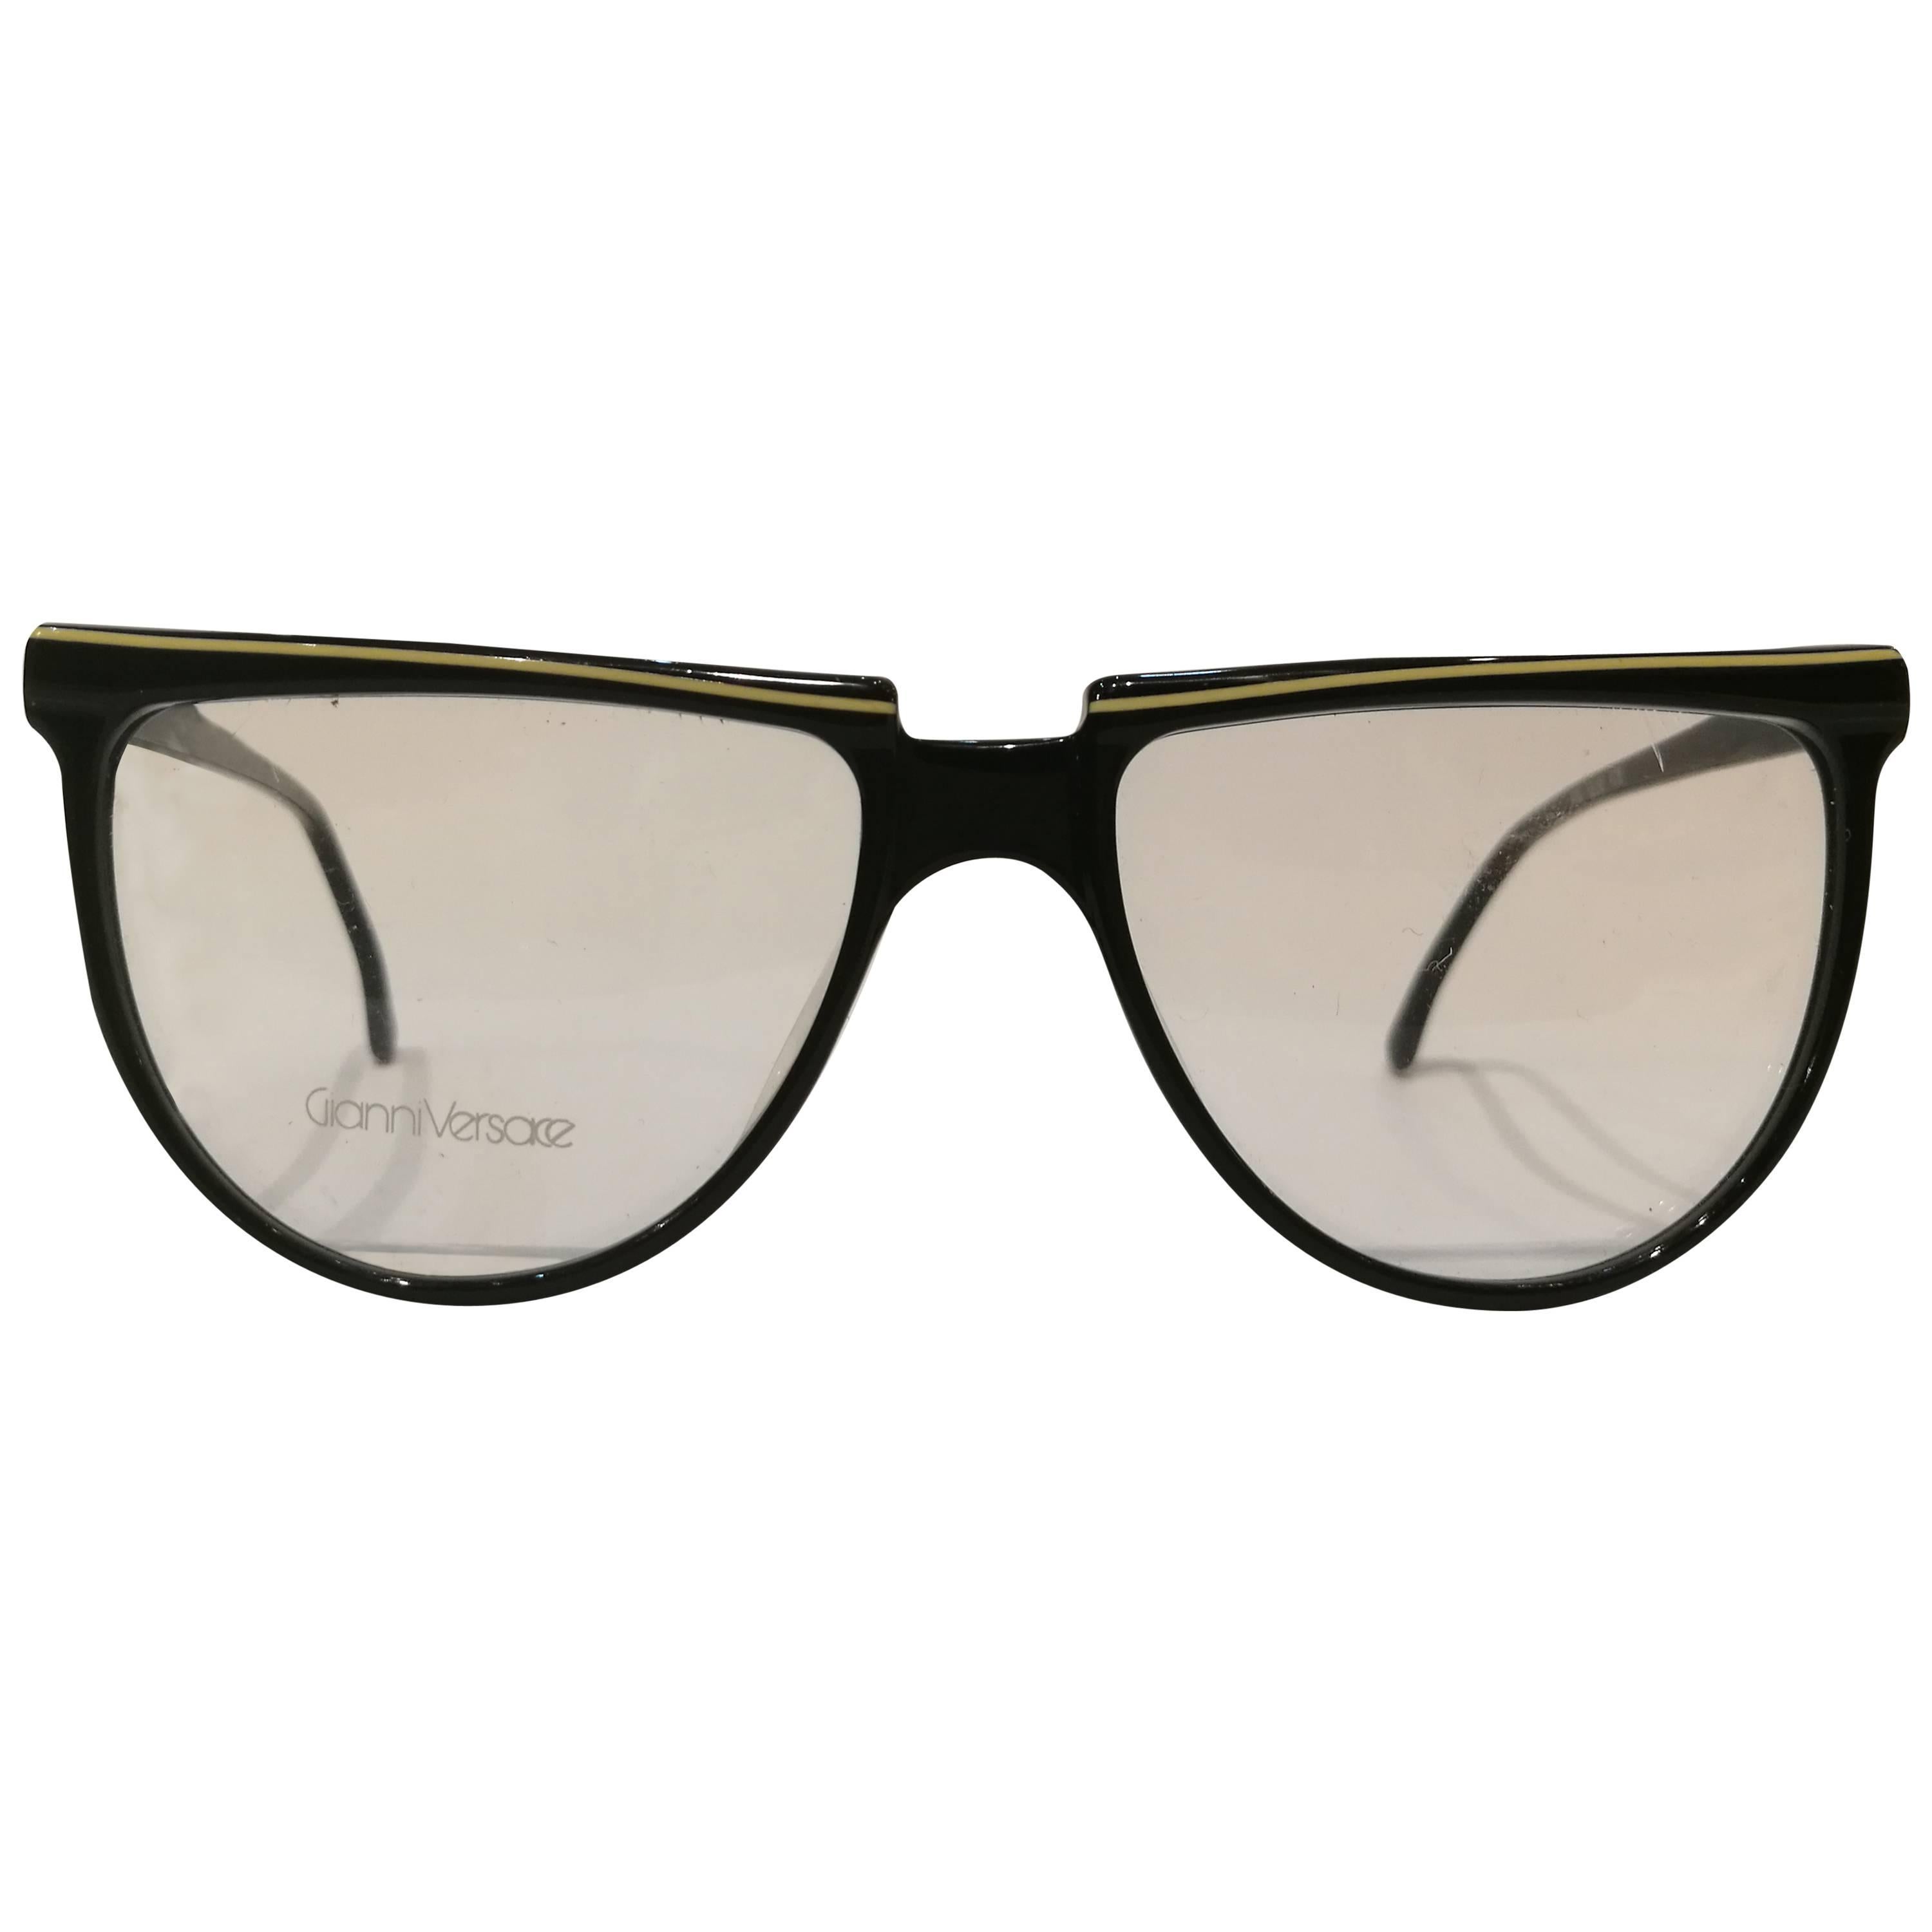 Gianni Versace black frame glasses